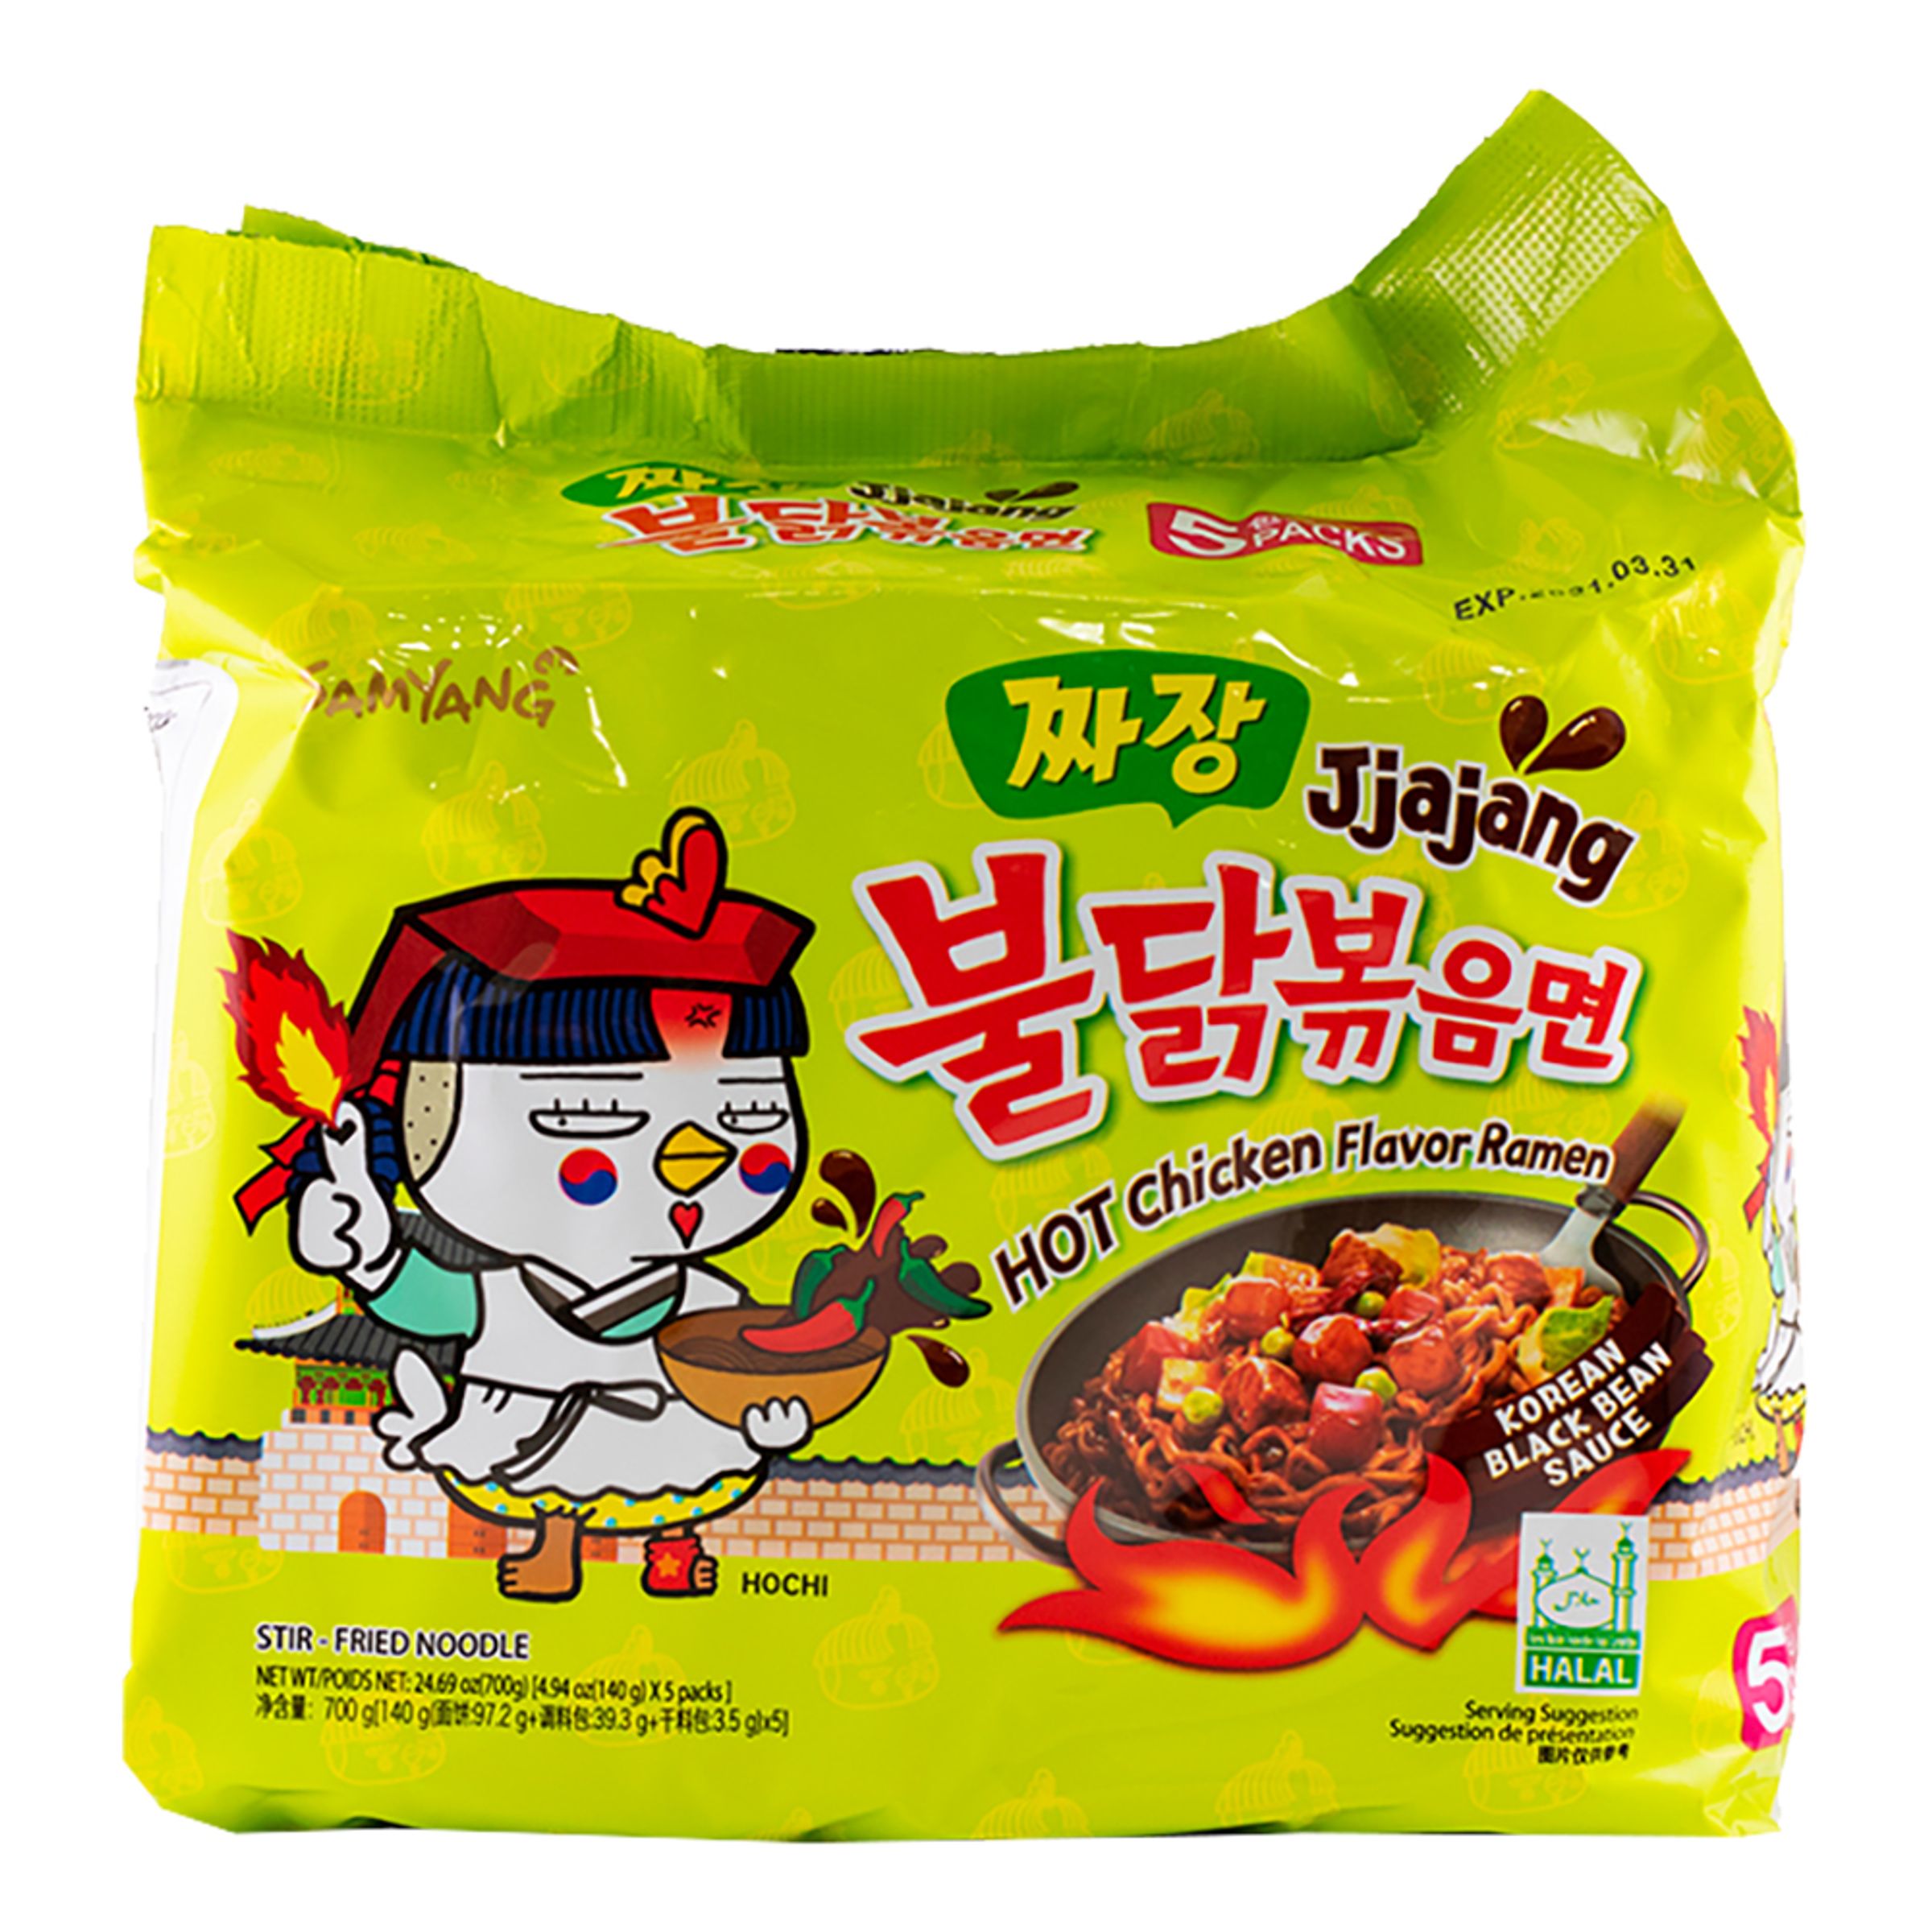 Samyang Hot Chicken Ramen Jjajang - 5-pack